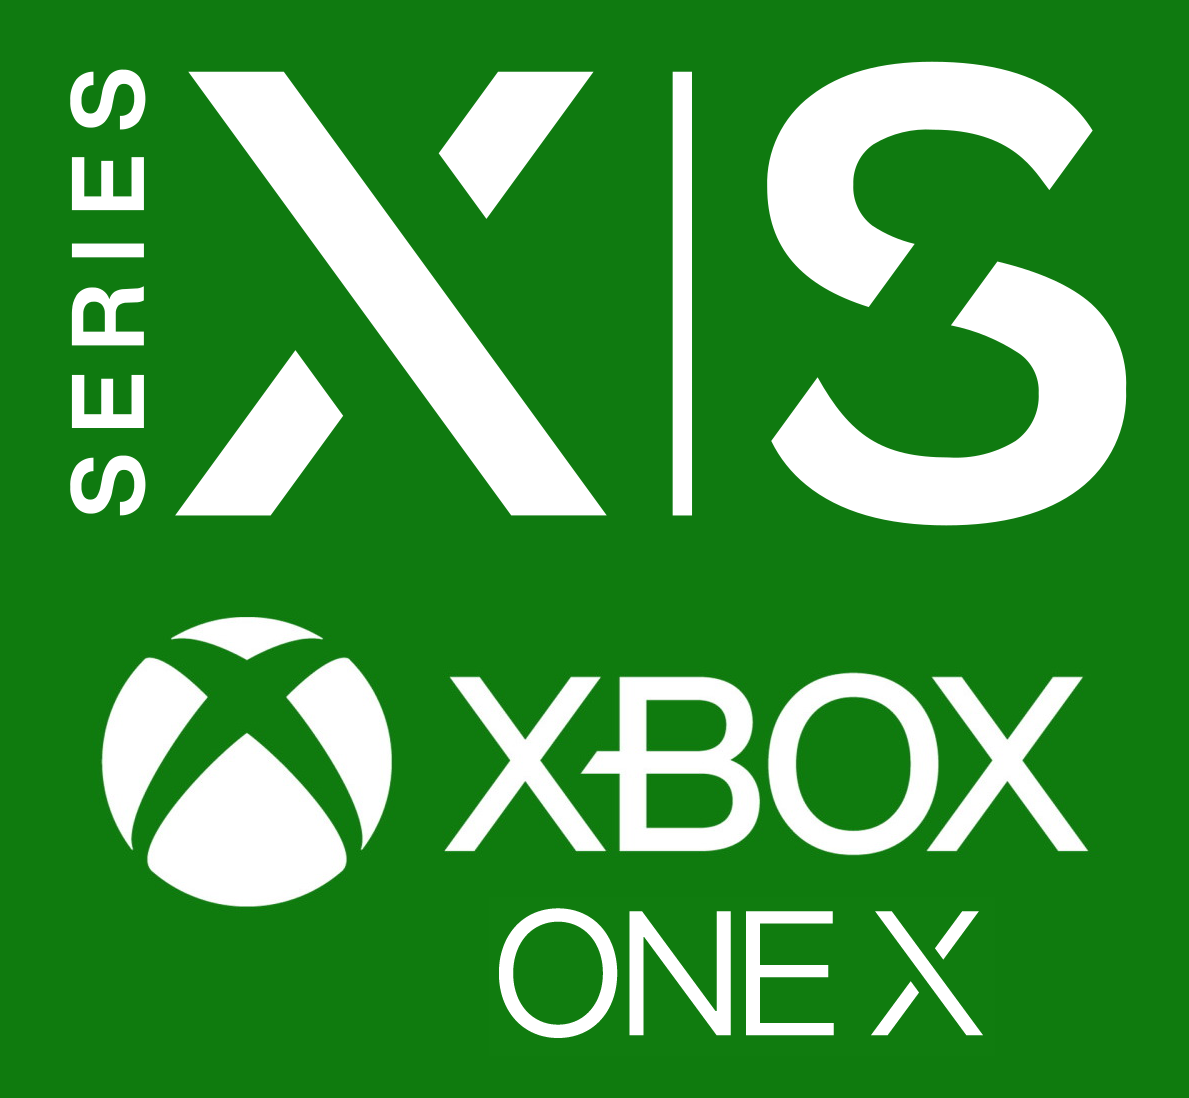 ✅ Battlefield 2042 XBOX ONE & XBOX SERIES X|S Ключ 🔑